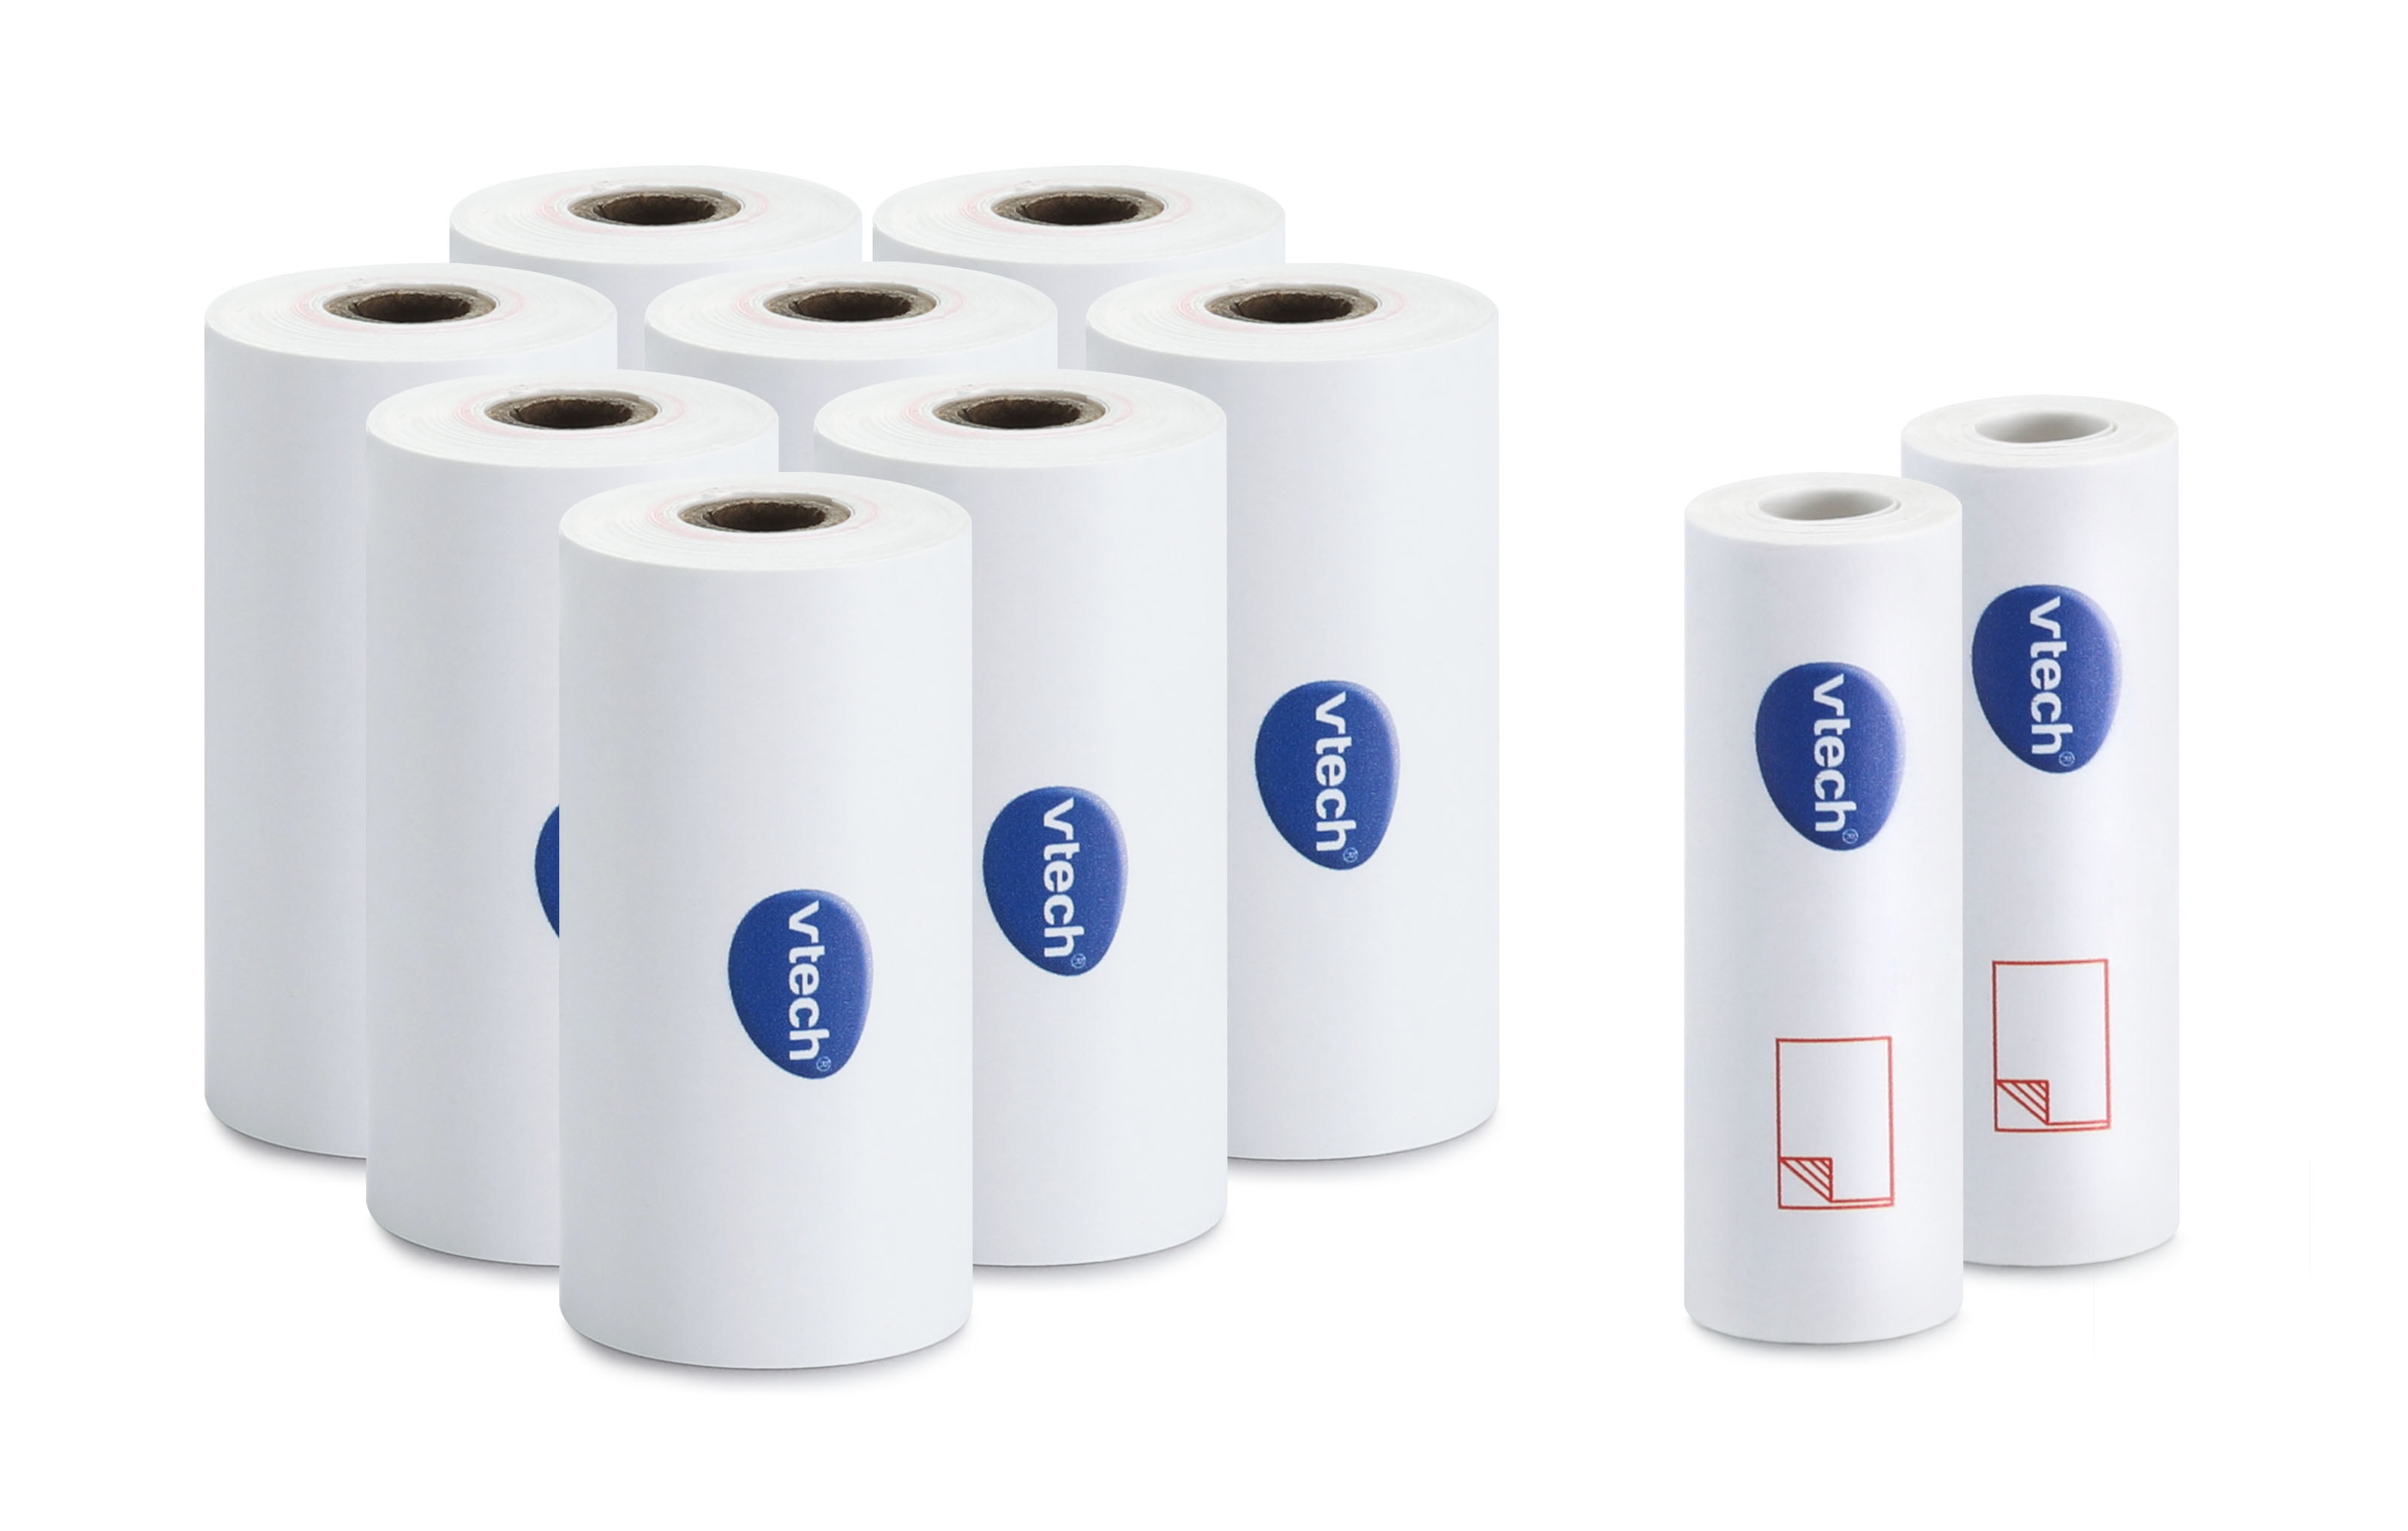 VTech KidiZoom Print Cam - Papier refill pack